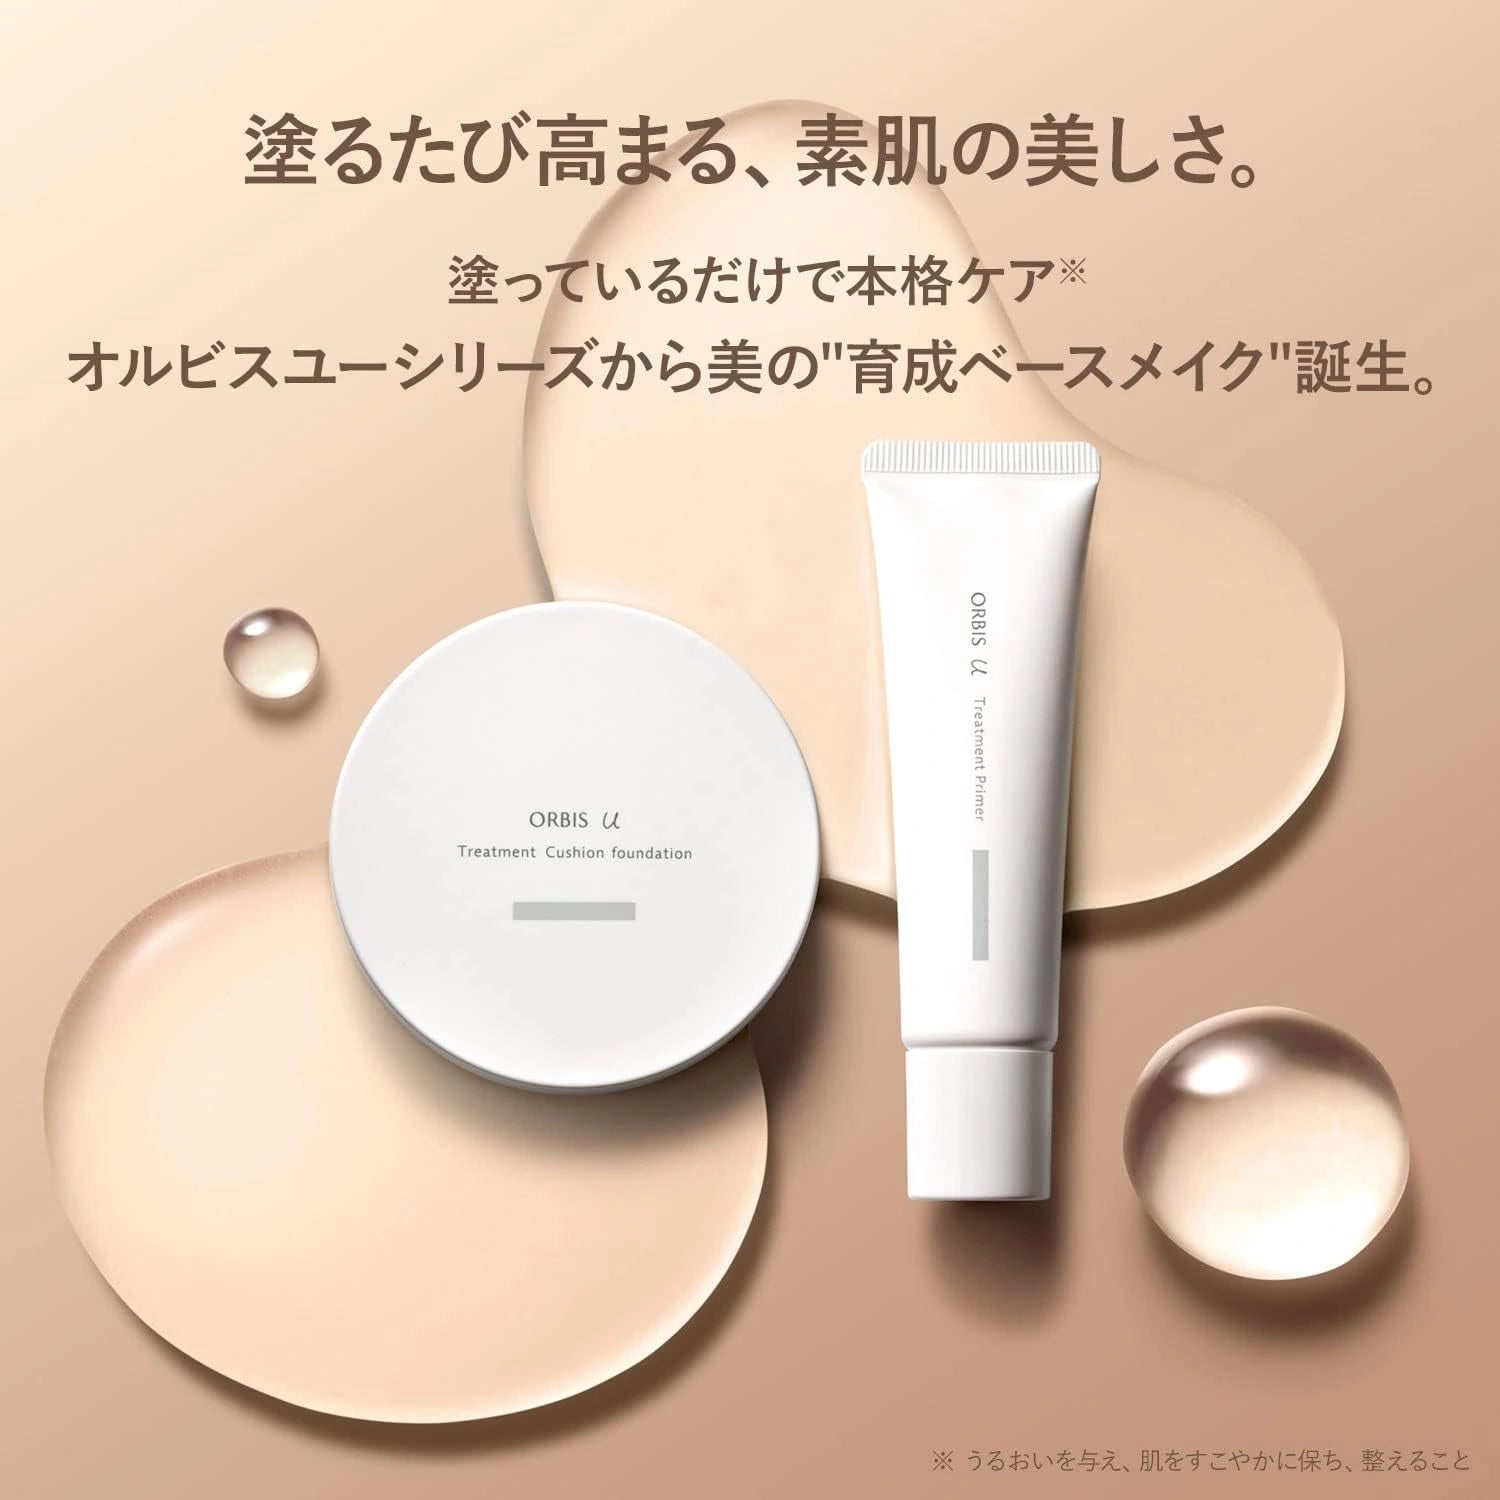 Orbis u Treatment Primer SPF50 PA+++ 30g - Buy Me Japan